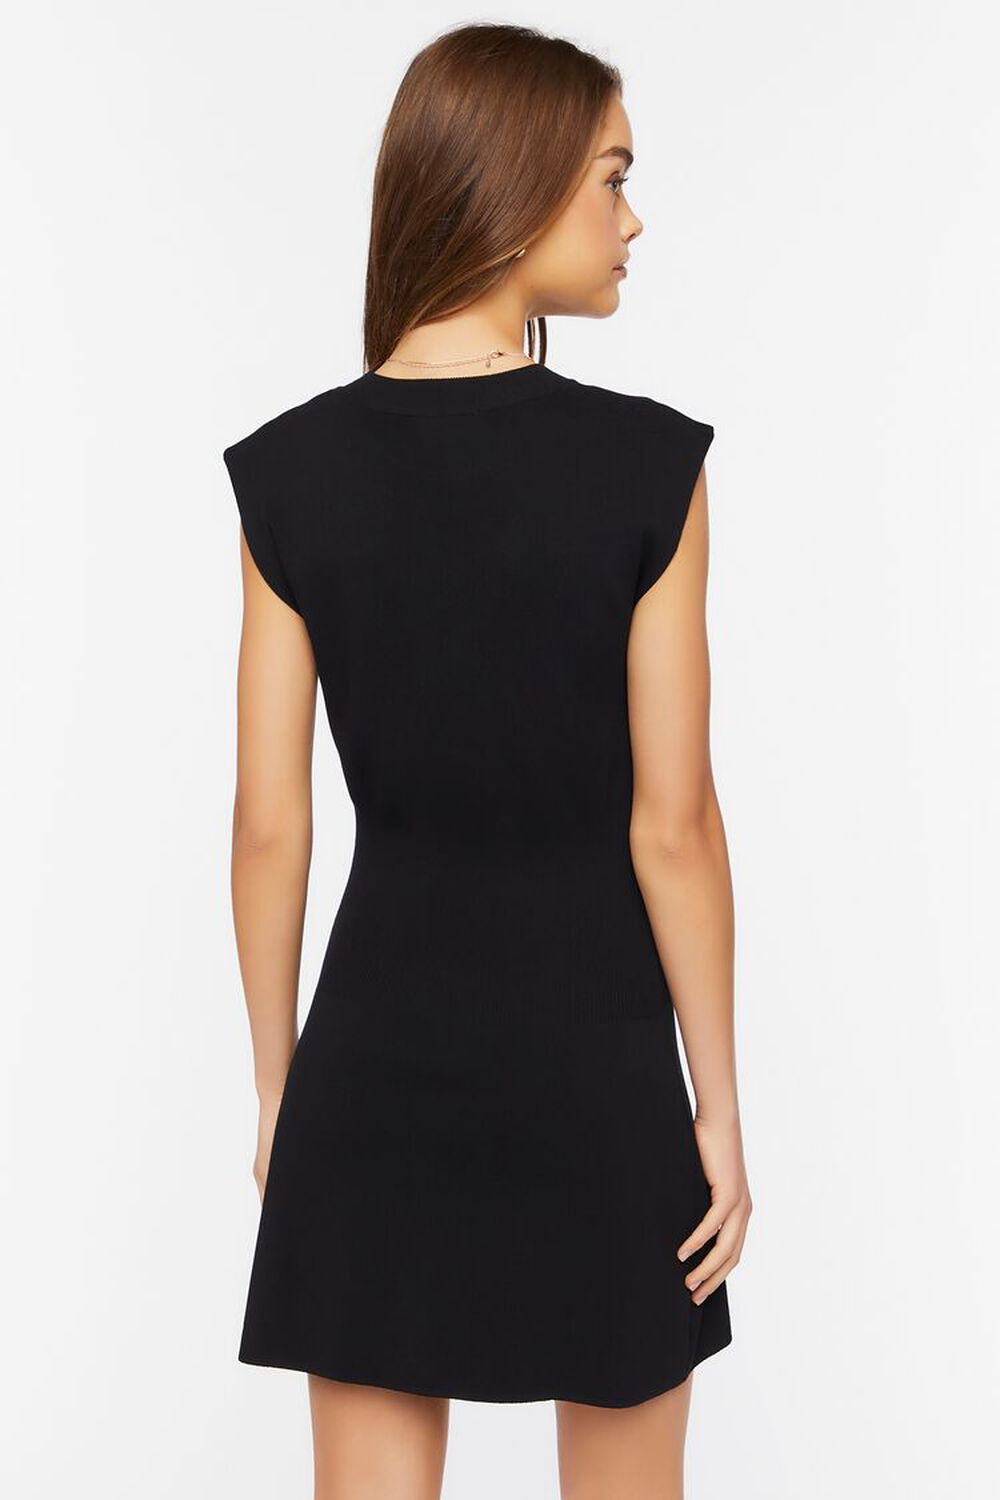 BLACK Cap-Sleeve Mini Sweater Dress, image 3